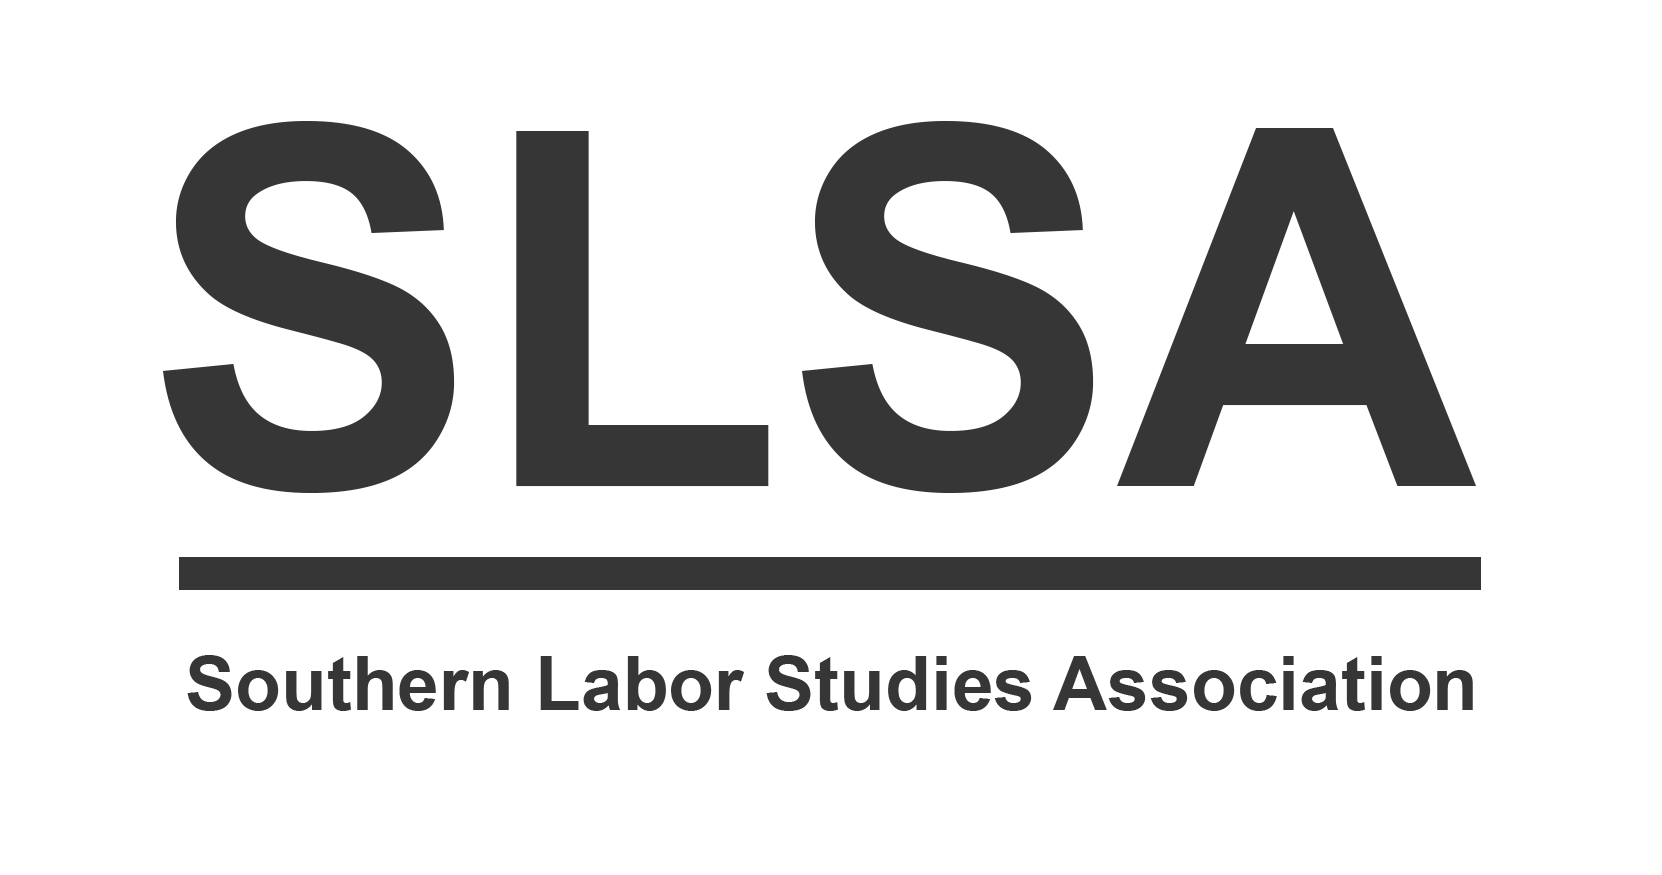 Southern Labor Studies Association - Home